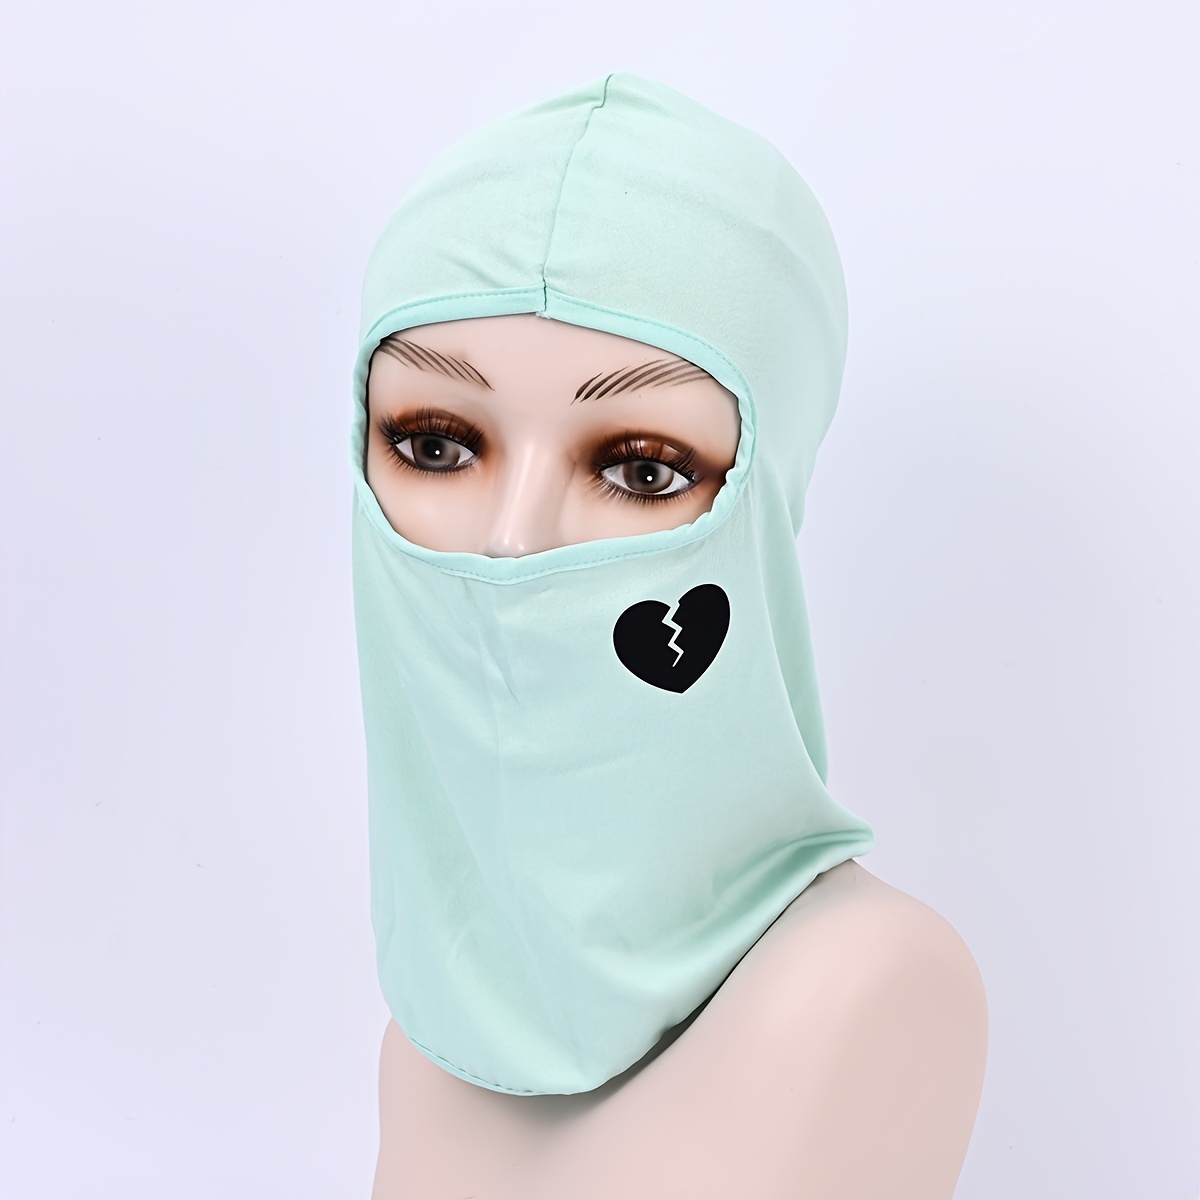 Arabic Heartless Hip hop Balaclava ski mask face mask Premium UV Masks